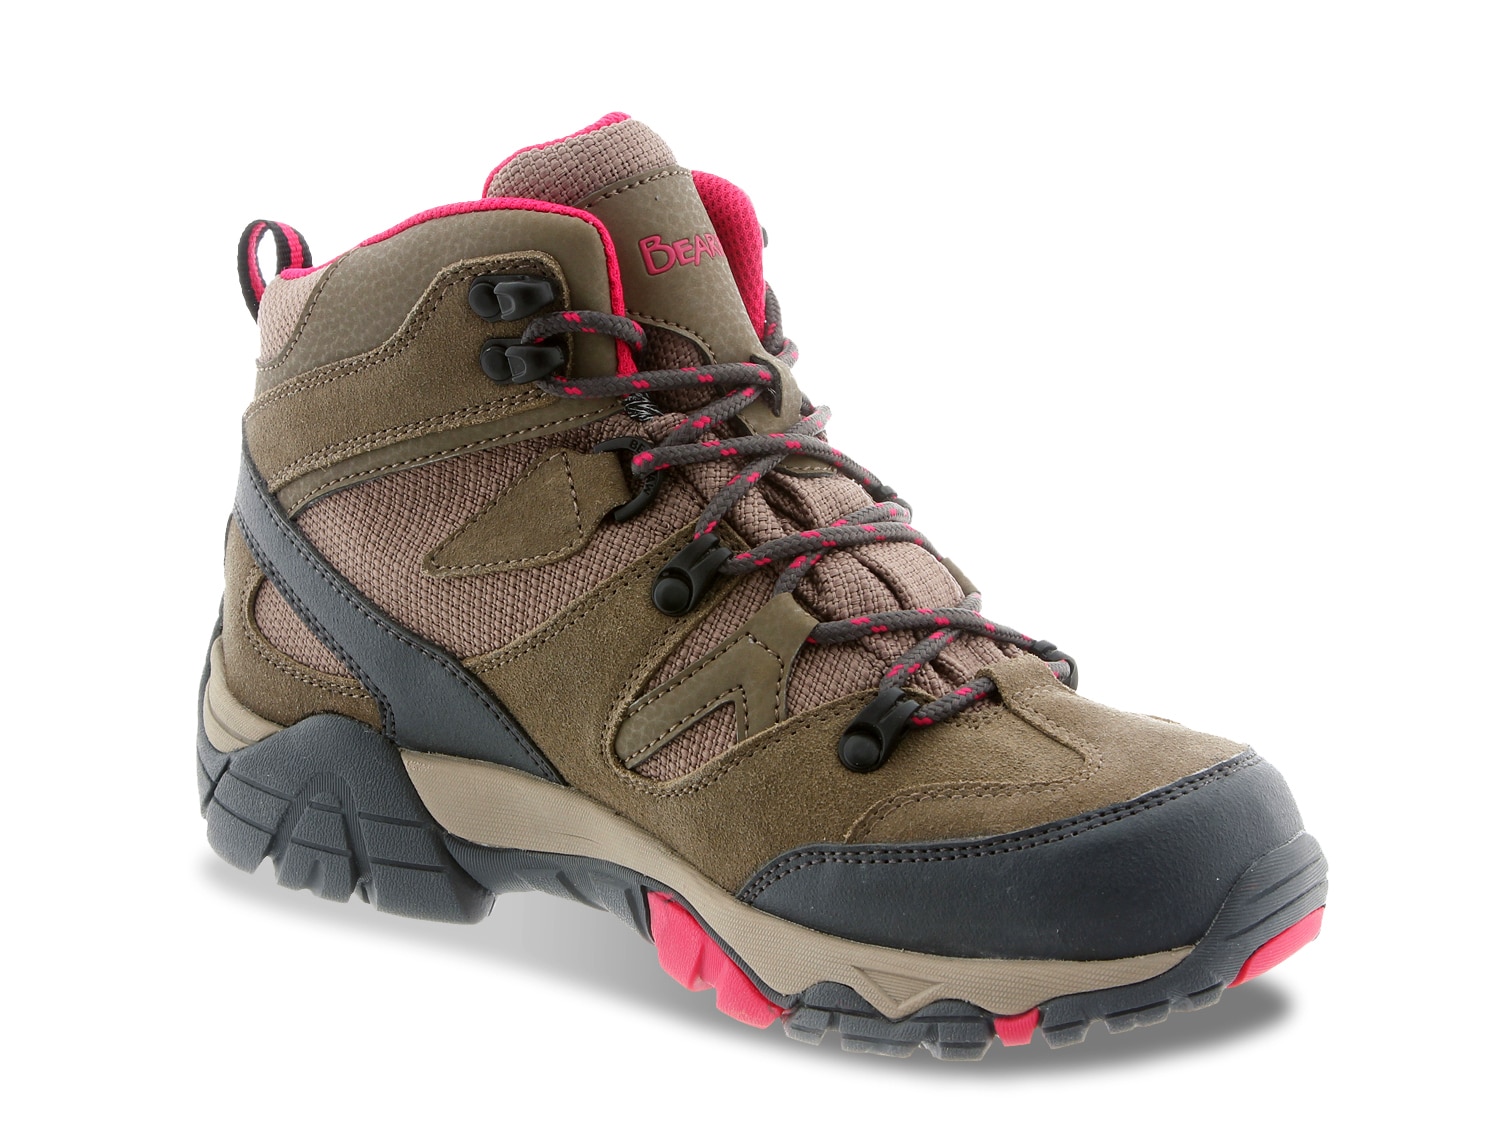 bearpaw women's hiking boots